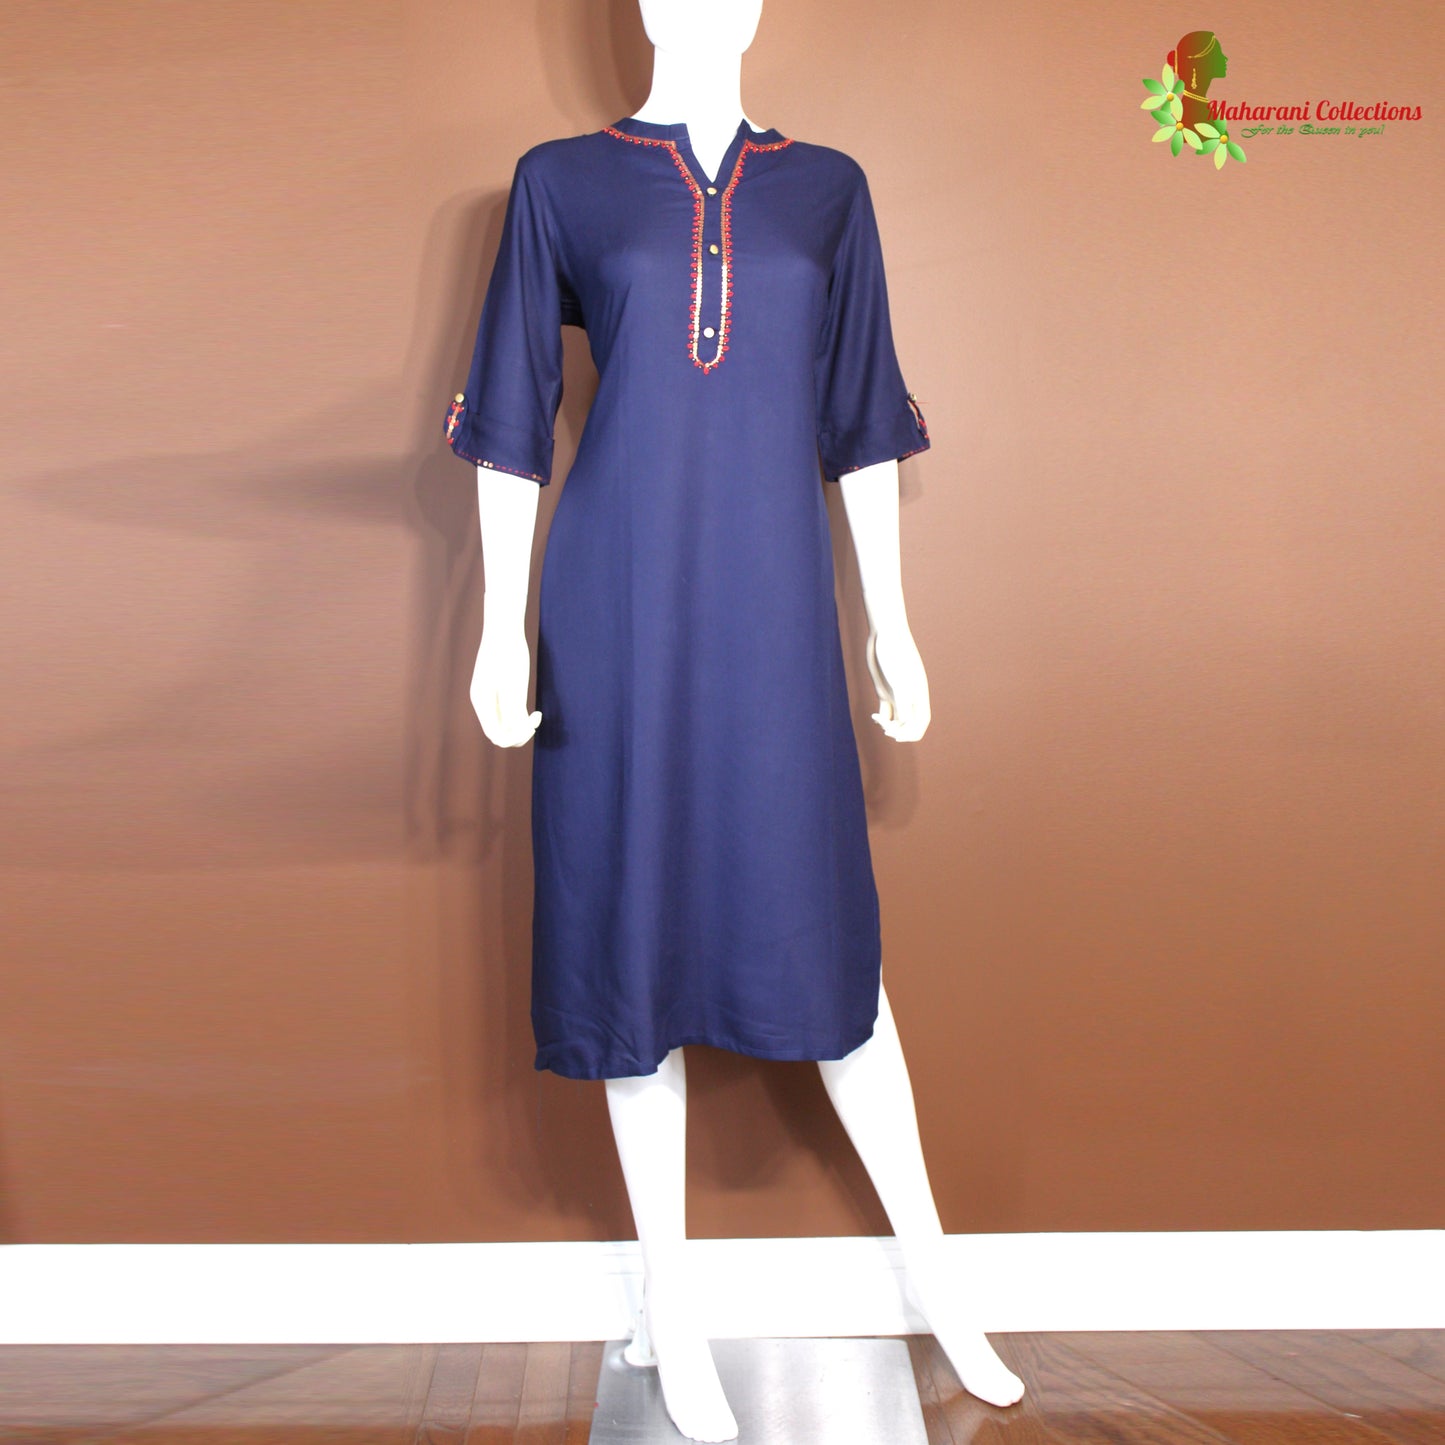 Maharani's Long Dress - Soft Cotton - Navy Blue (L)